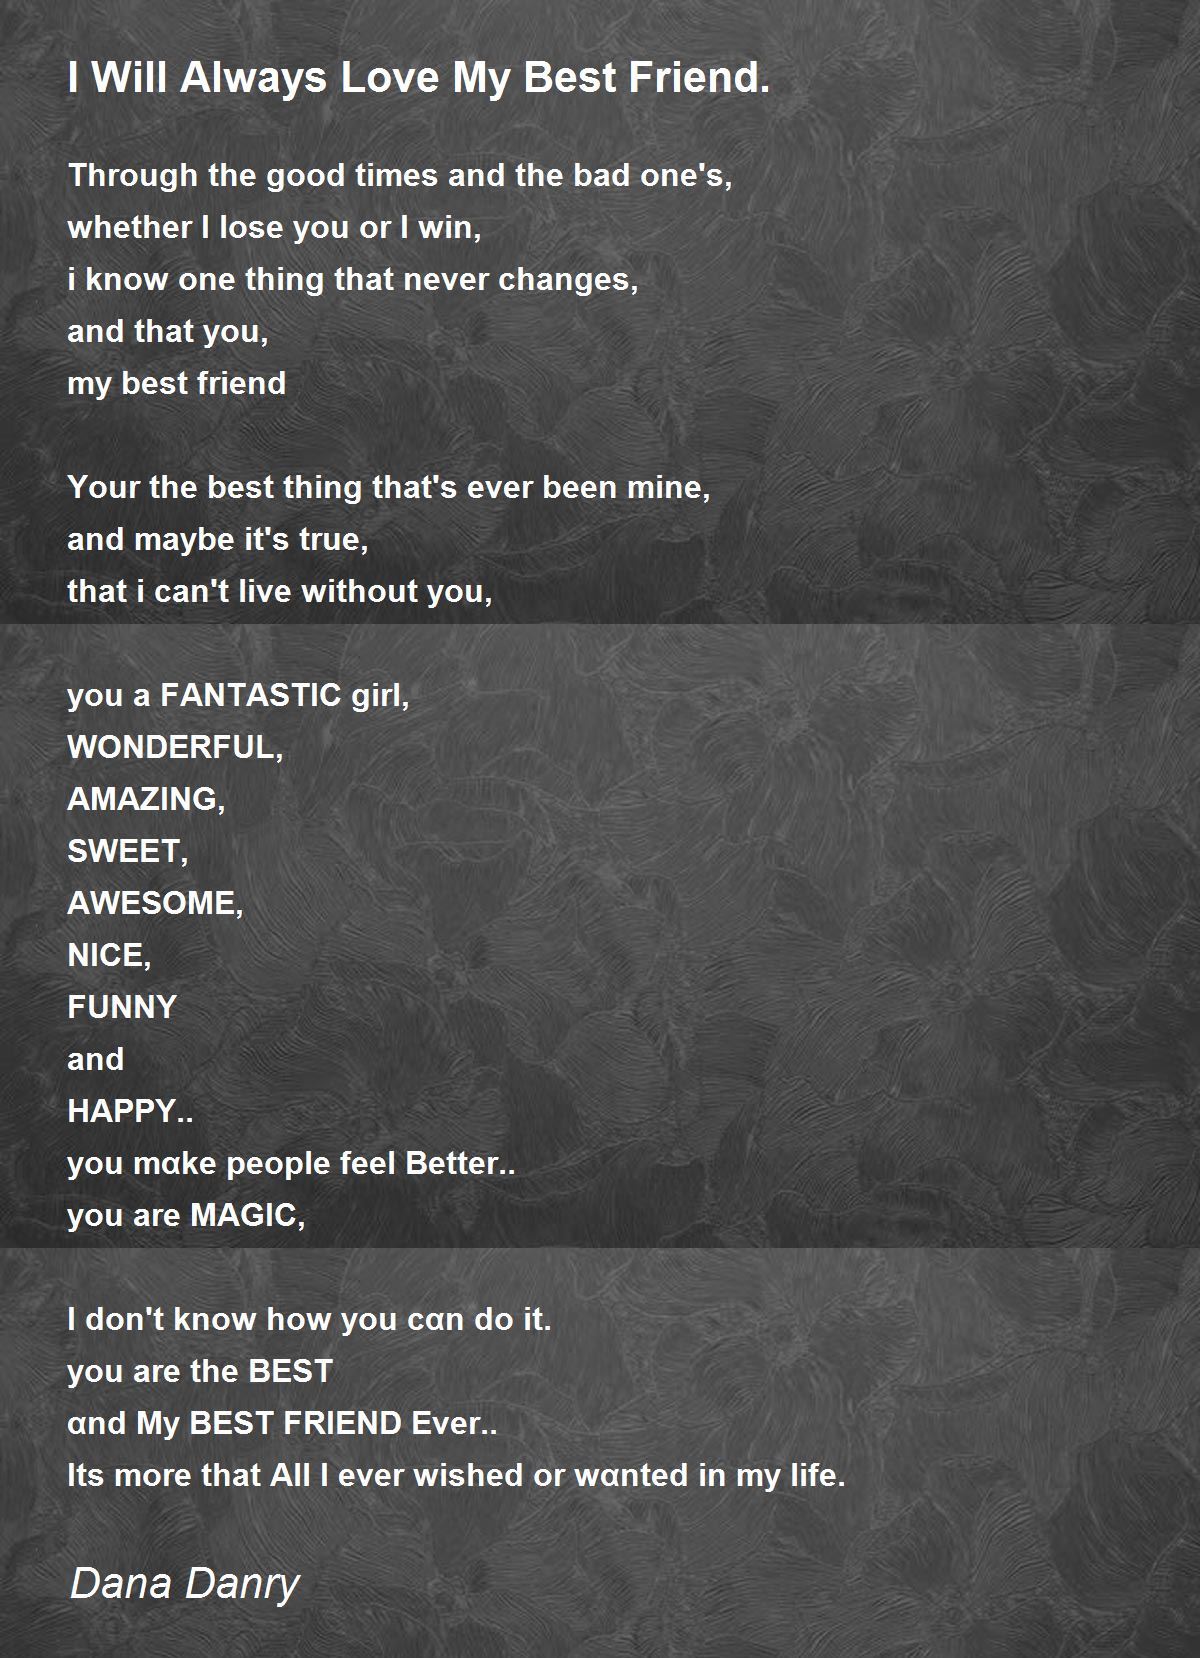 I Will Always Love My Best Friend. - I Will Always Love My Best Friend. Poem  by Dana Danry